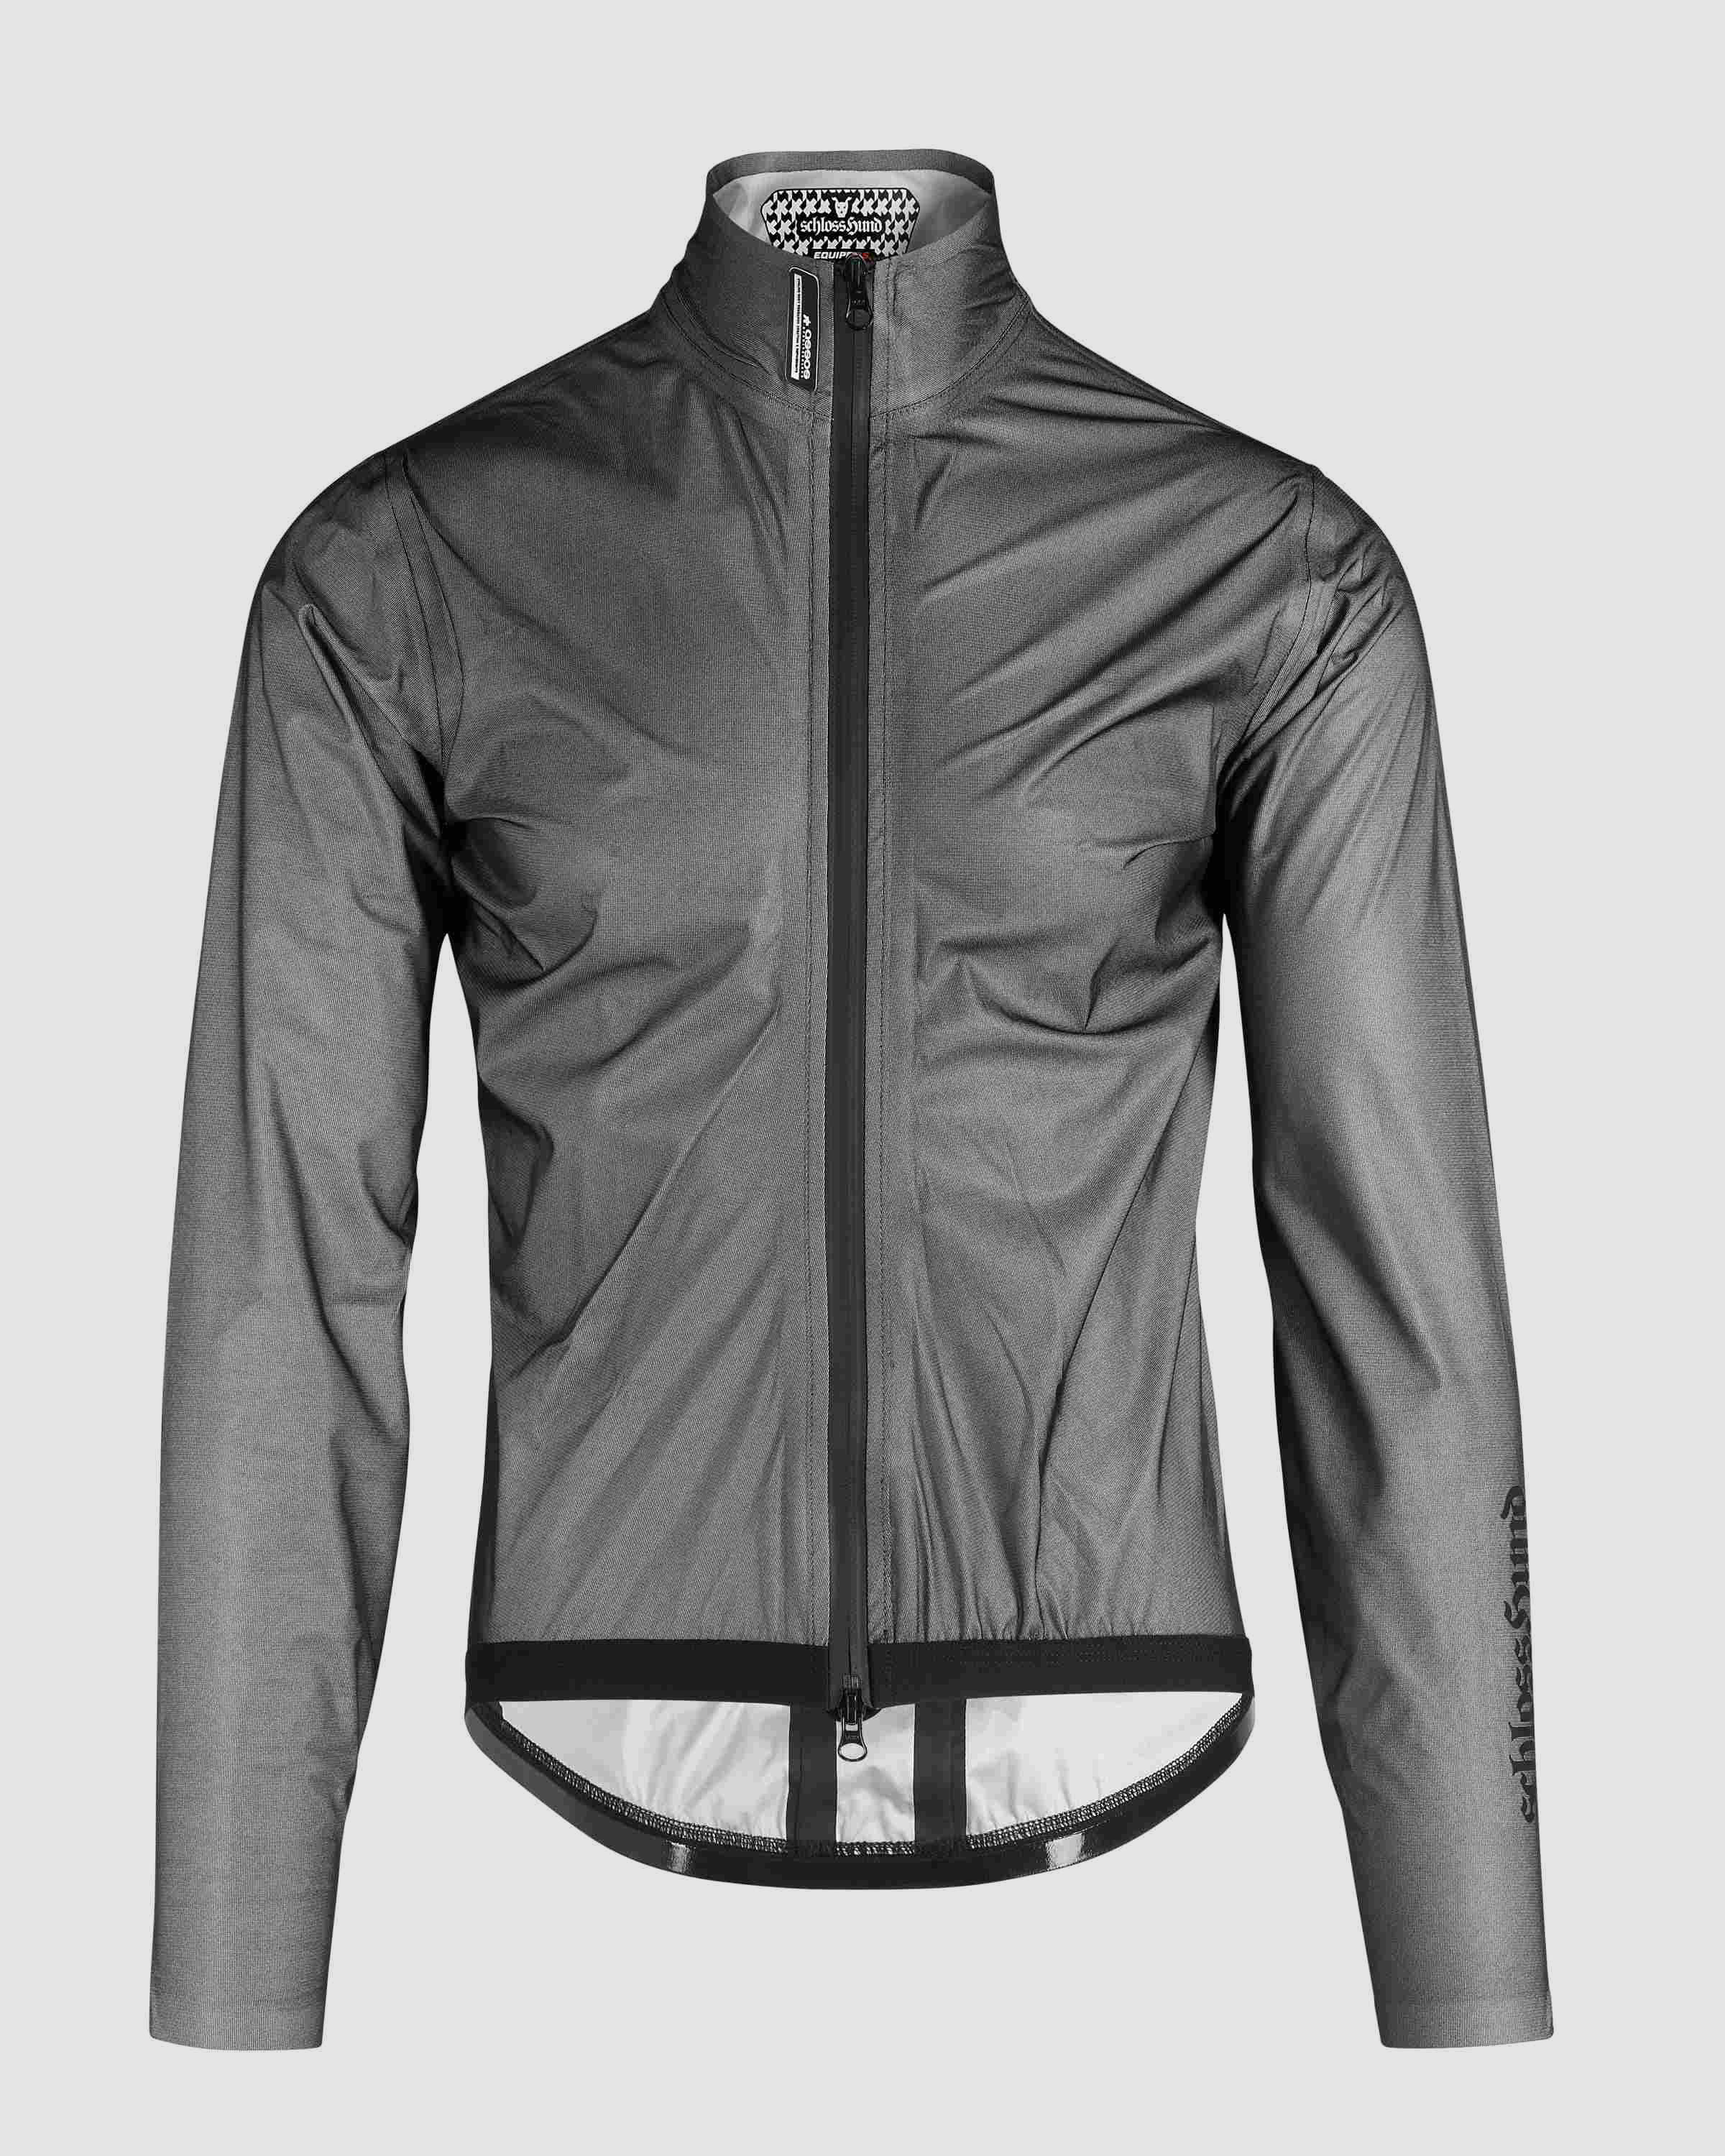 EQUIPE RS rain jacket, blackSeries » ASSOS Of Switzerland